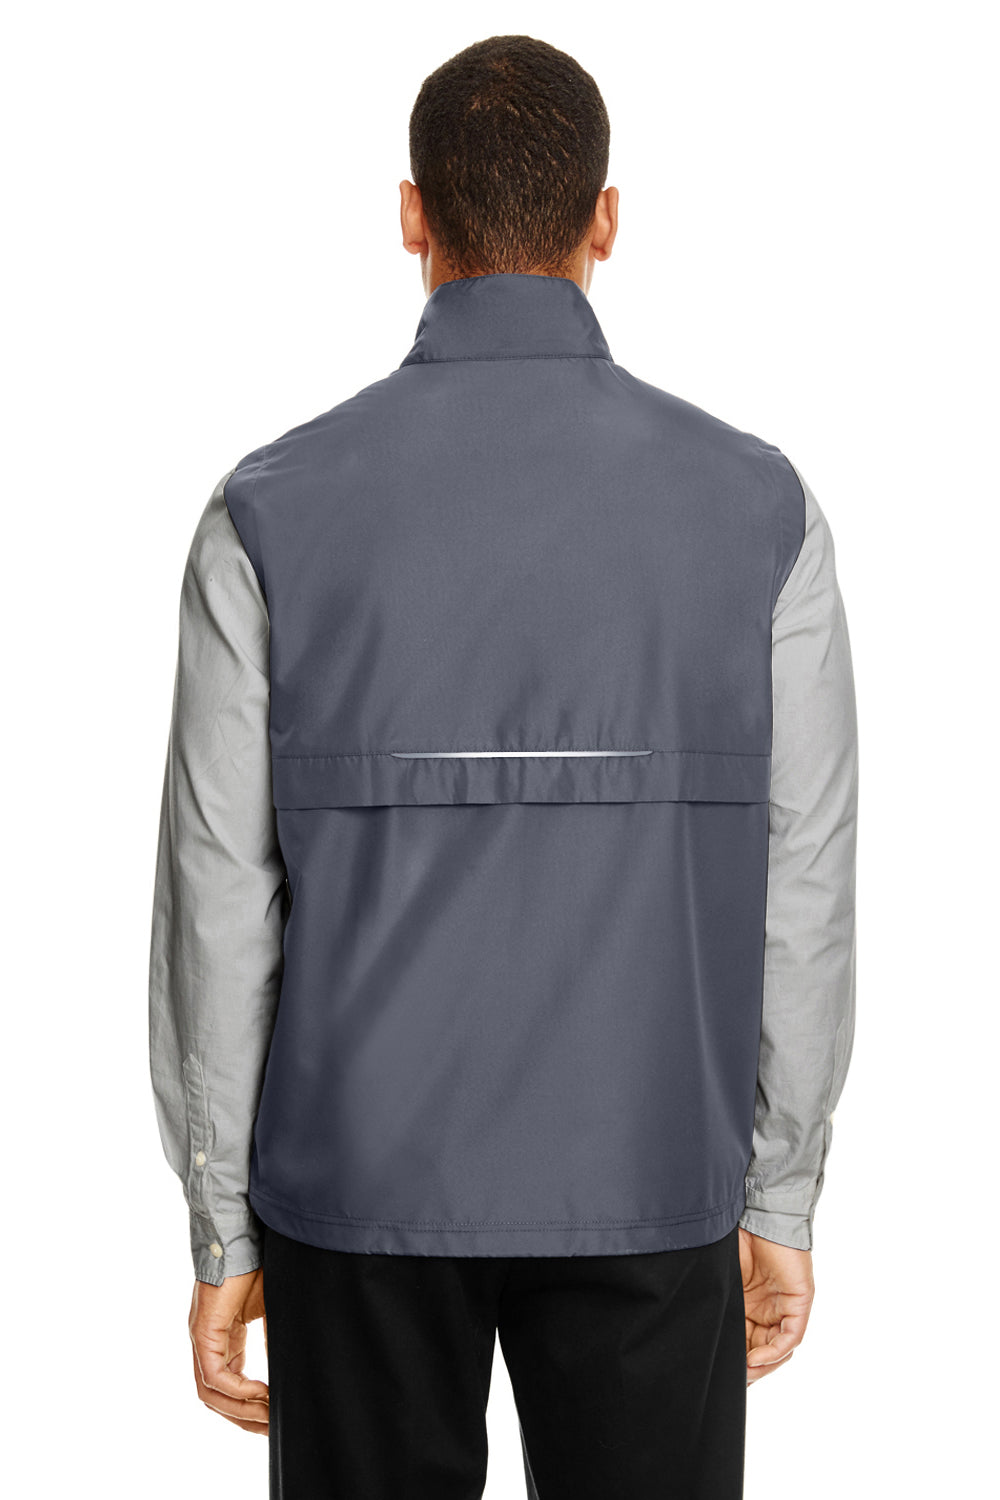 Core 365 CE703 Mens Techno Lite Water Resistant Full Zip Vest Carbon Grey Back